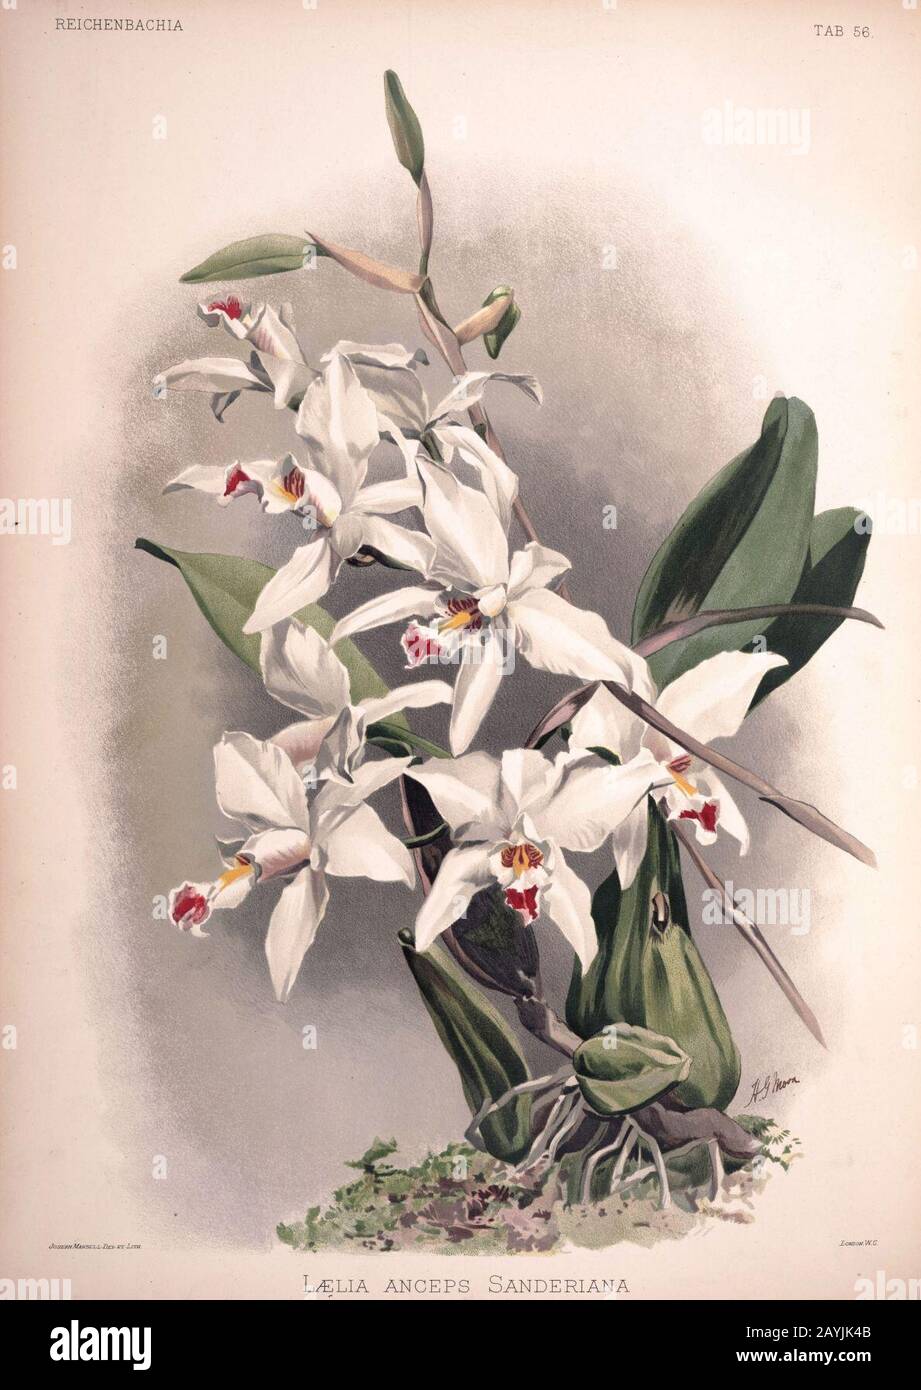 Frederick Sander - Reichenbachia II plate 56 (1890) - Laelia anceps sanderiana. Stock Photo